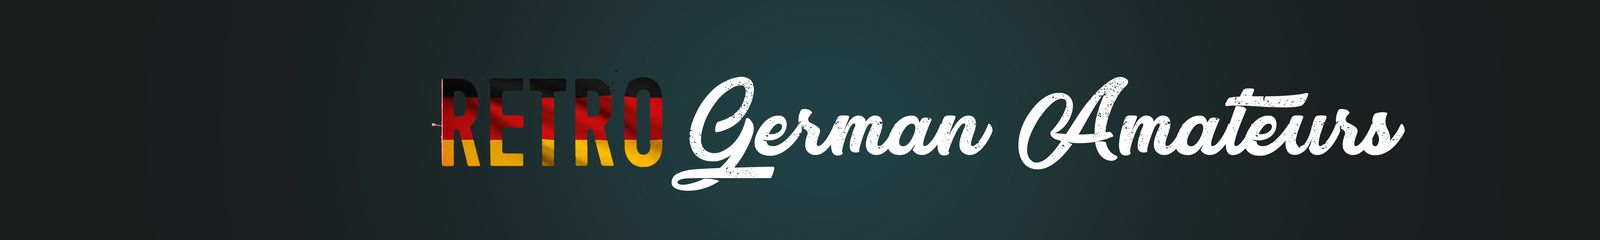 Retro German Amateurs